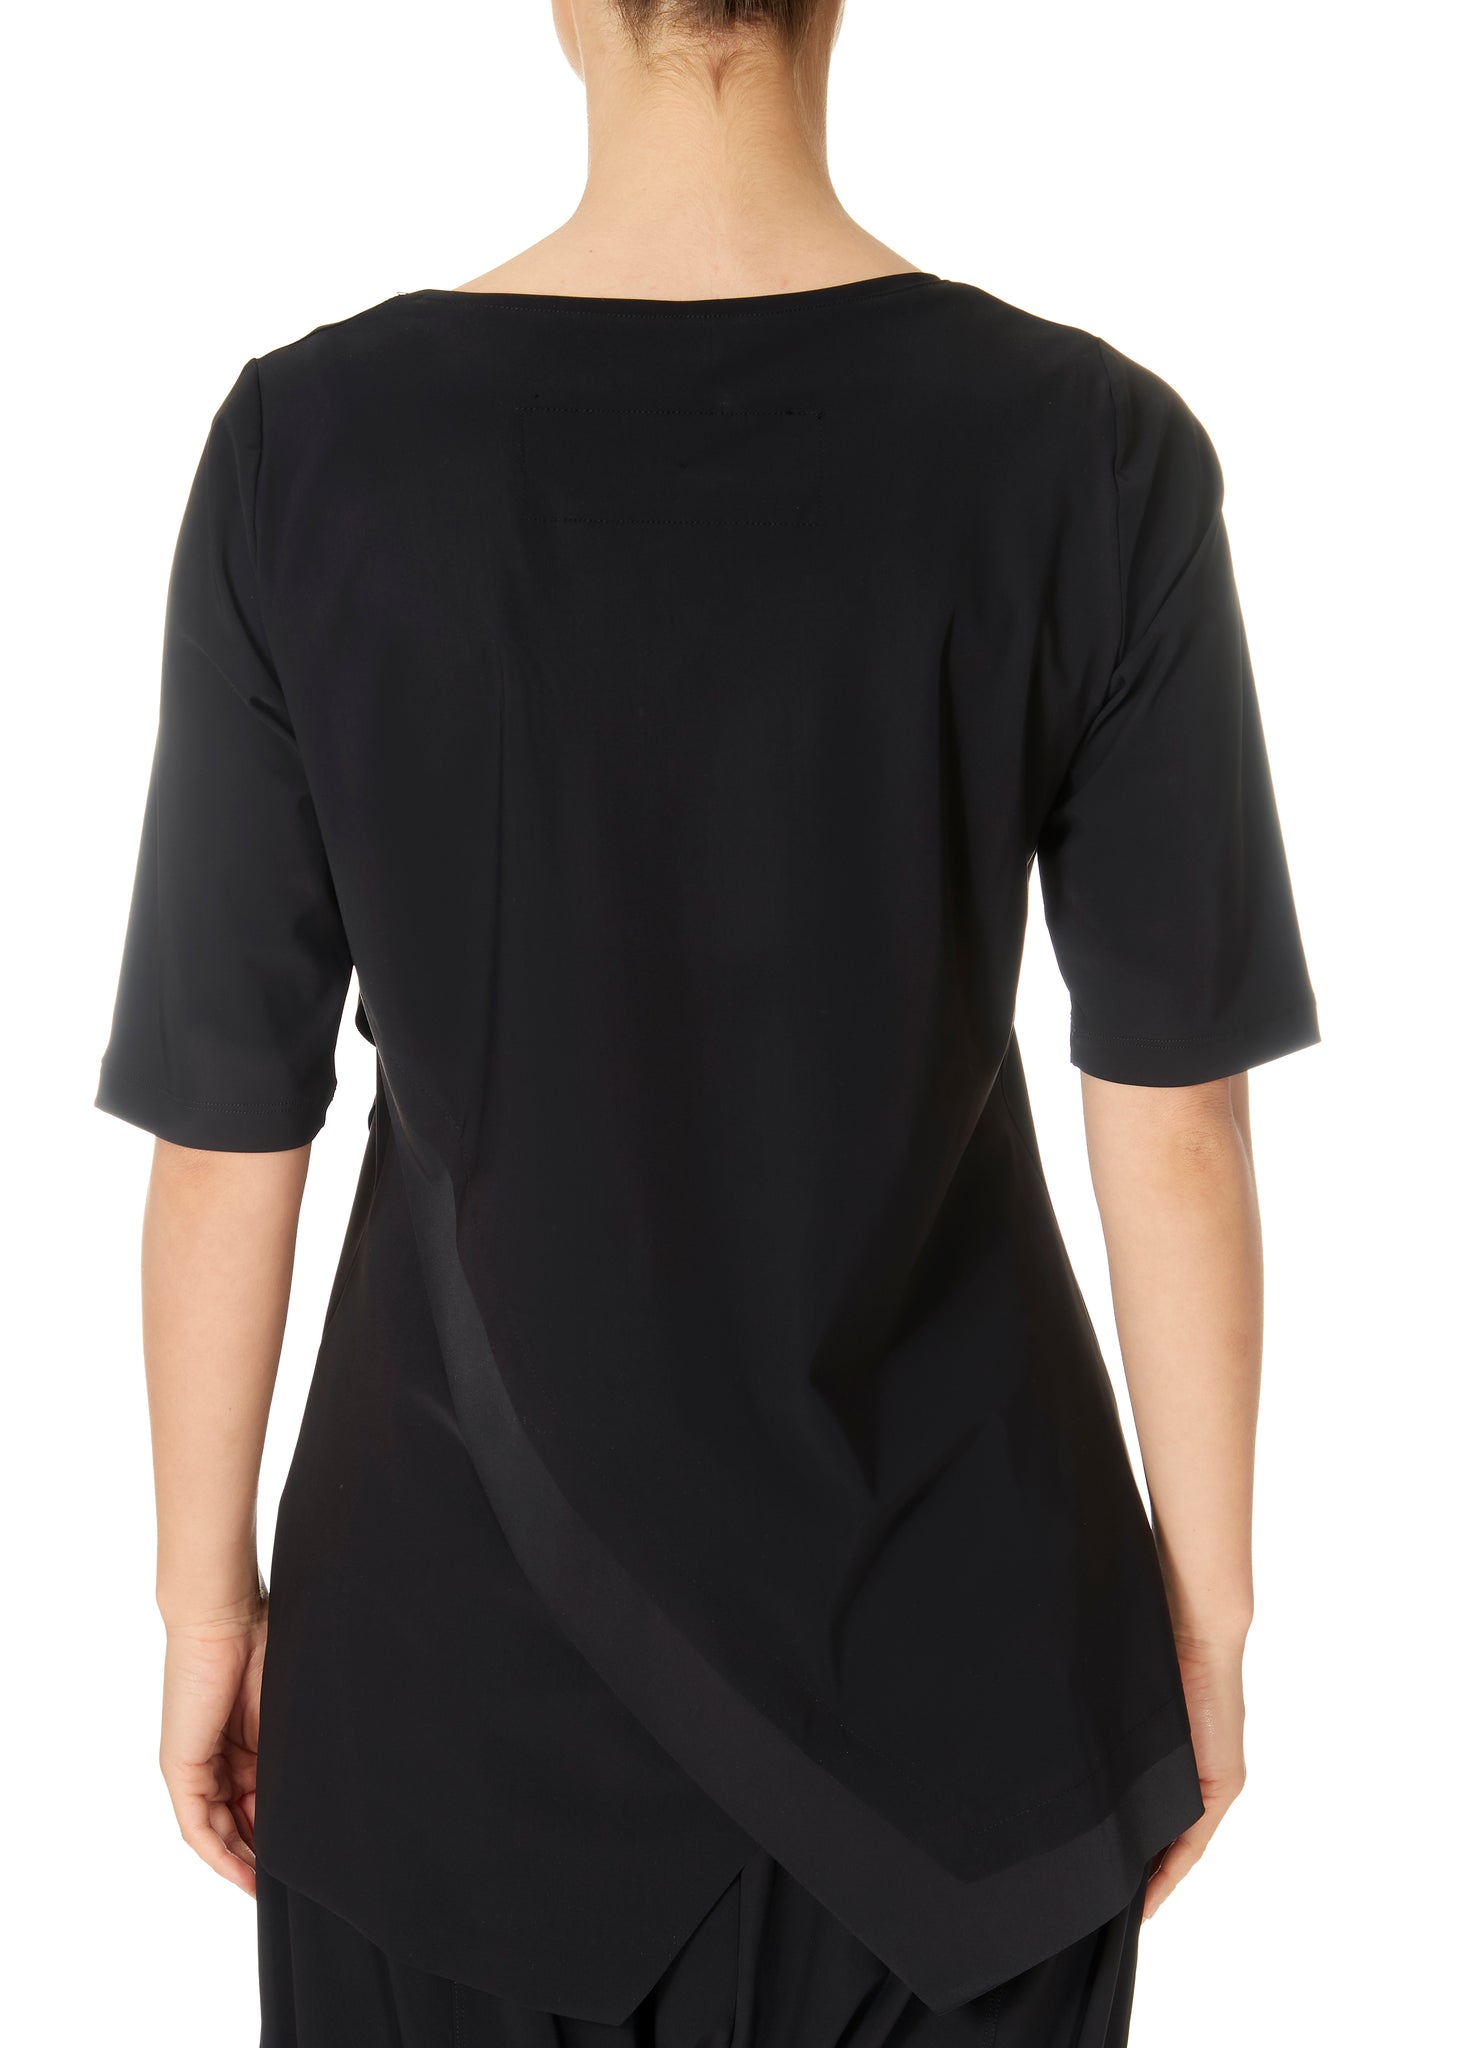 ELLi Lagen T-shirt Black